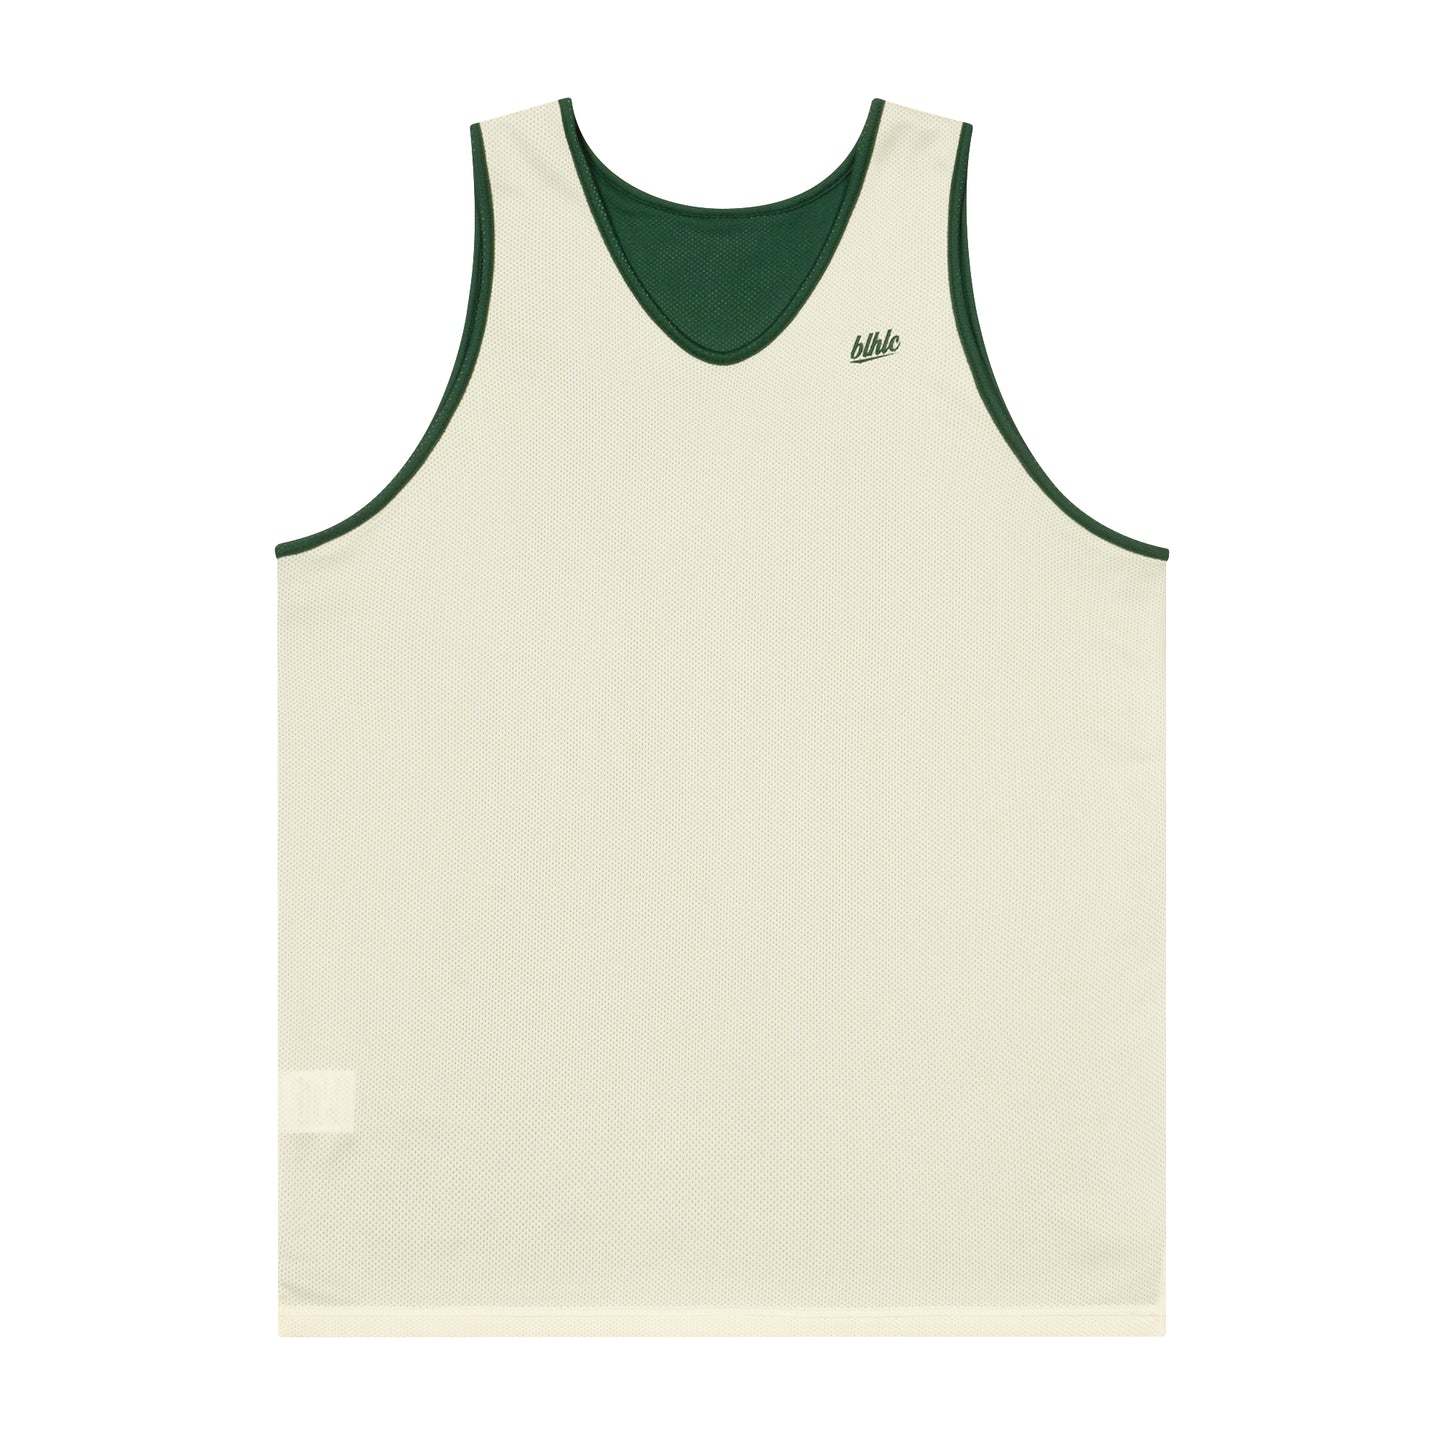 Basic Reversible Jersey (dark green/ivory)